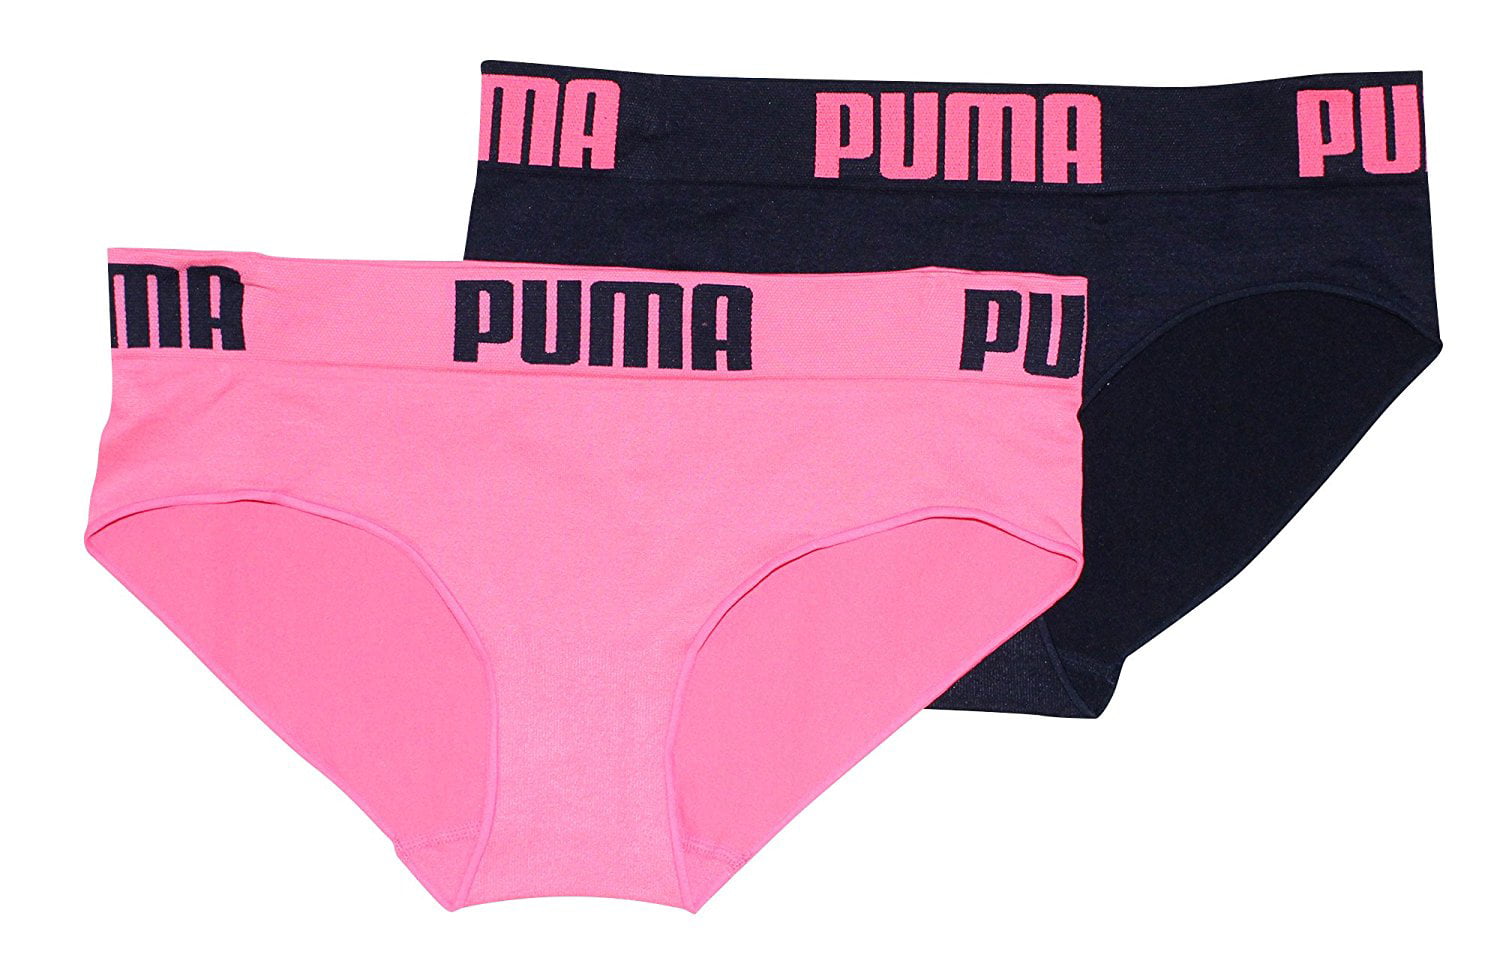 Panty, Pink/Navy, X-Large - Walmart.com 